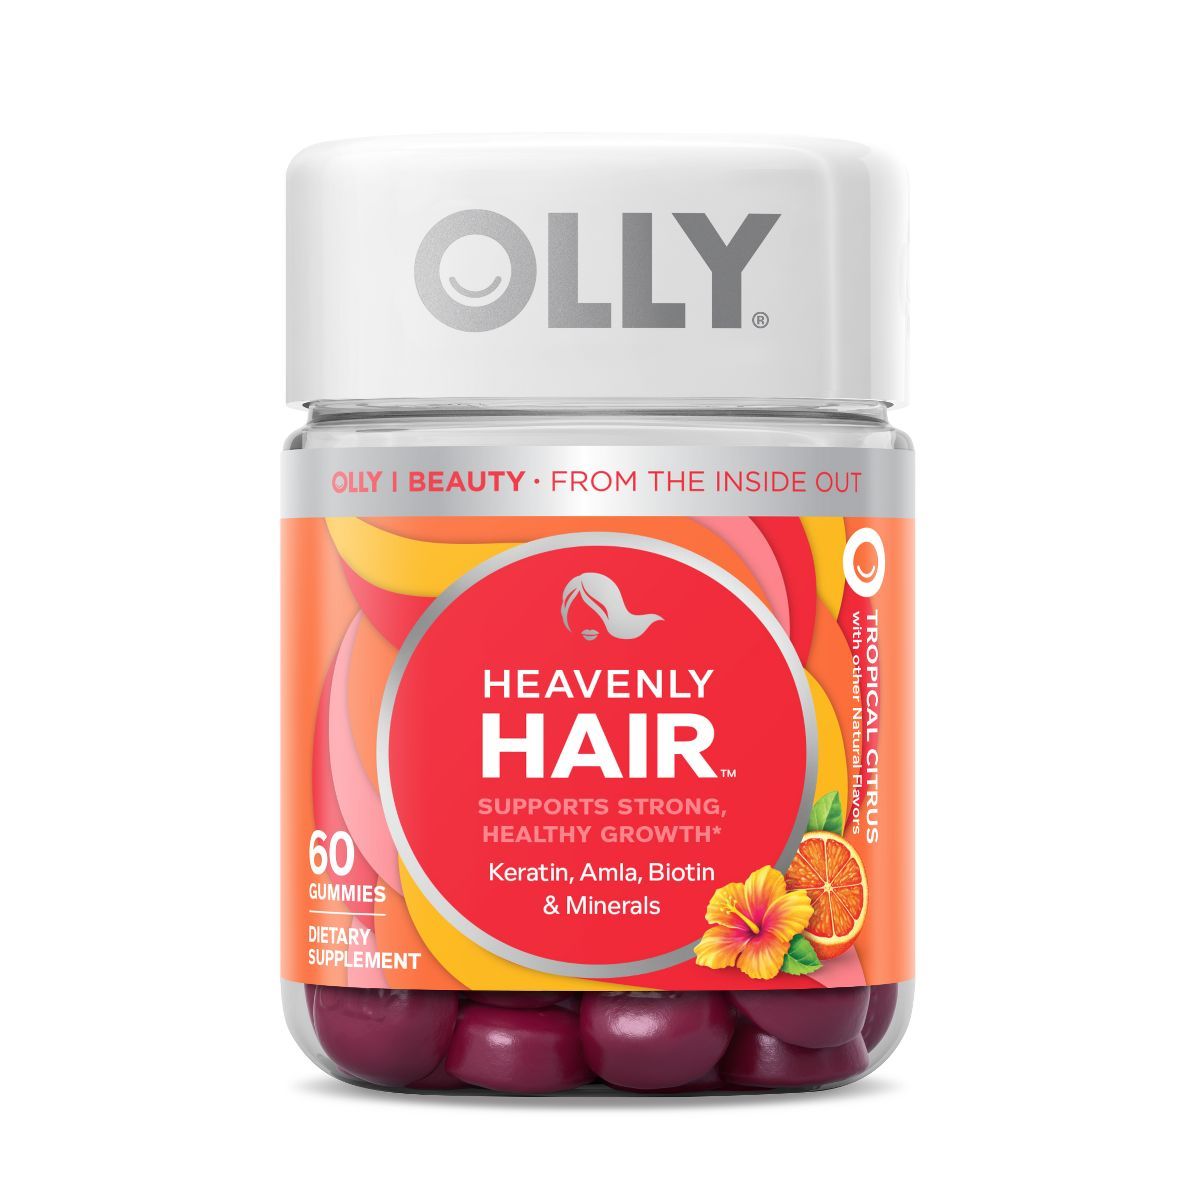 OLLY Heavenly Hair Supplement Gummies with Keratin, Amla, Biotin & Minerals - 60ct | Target